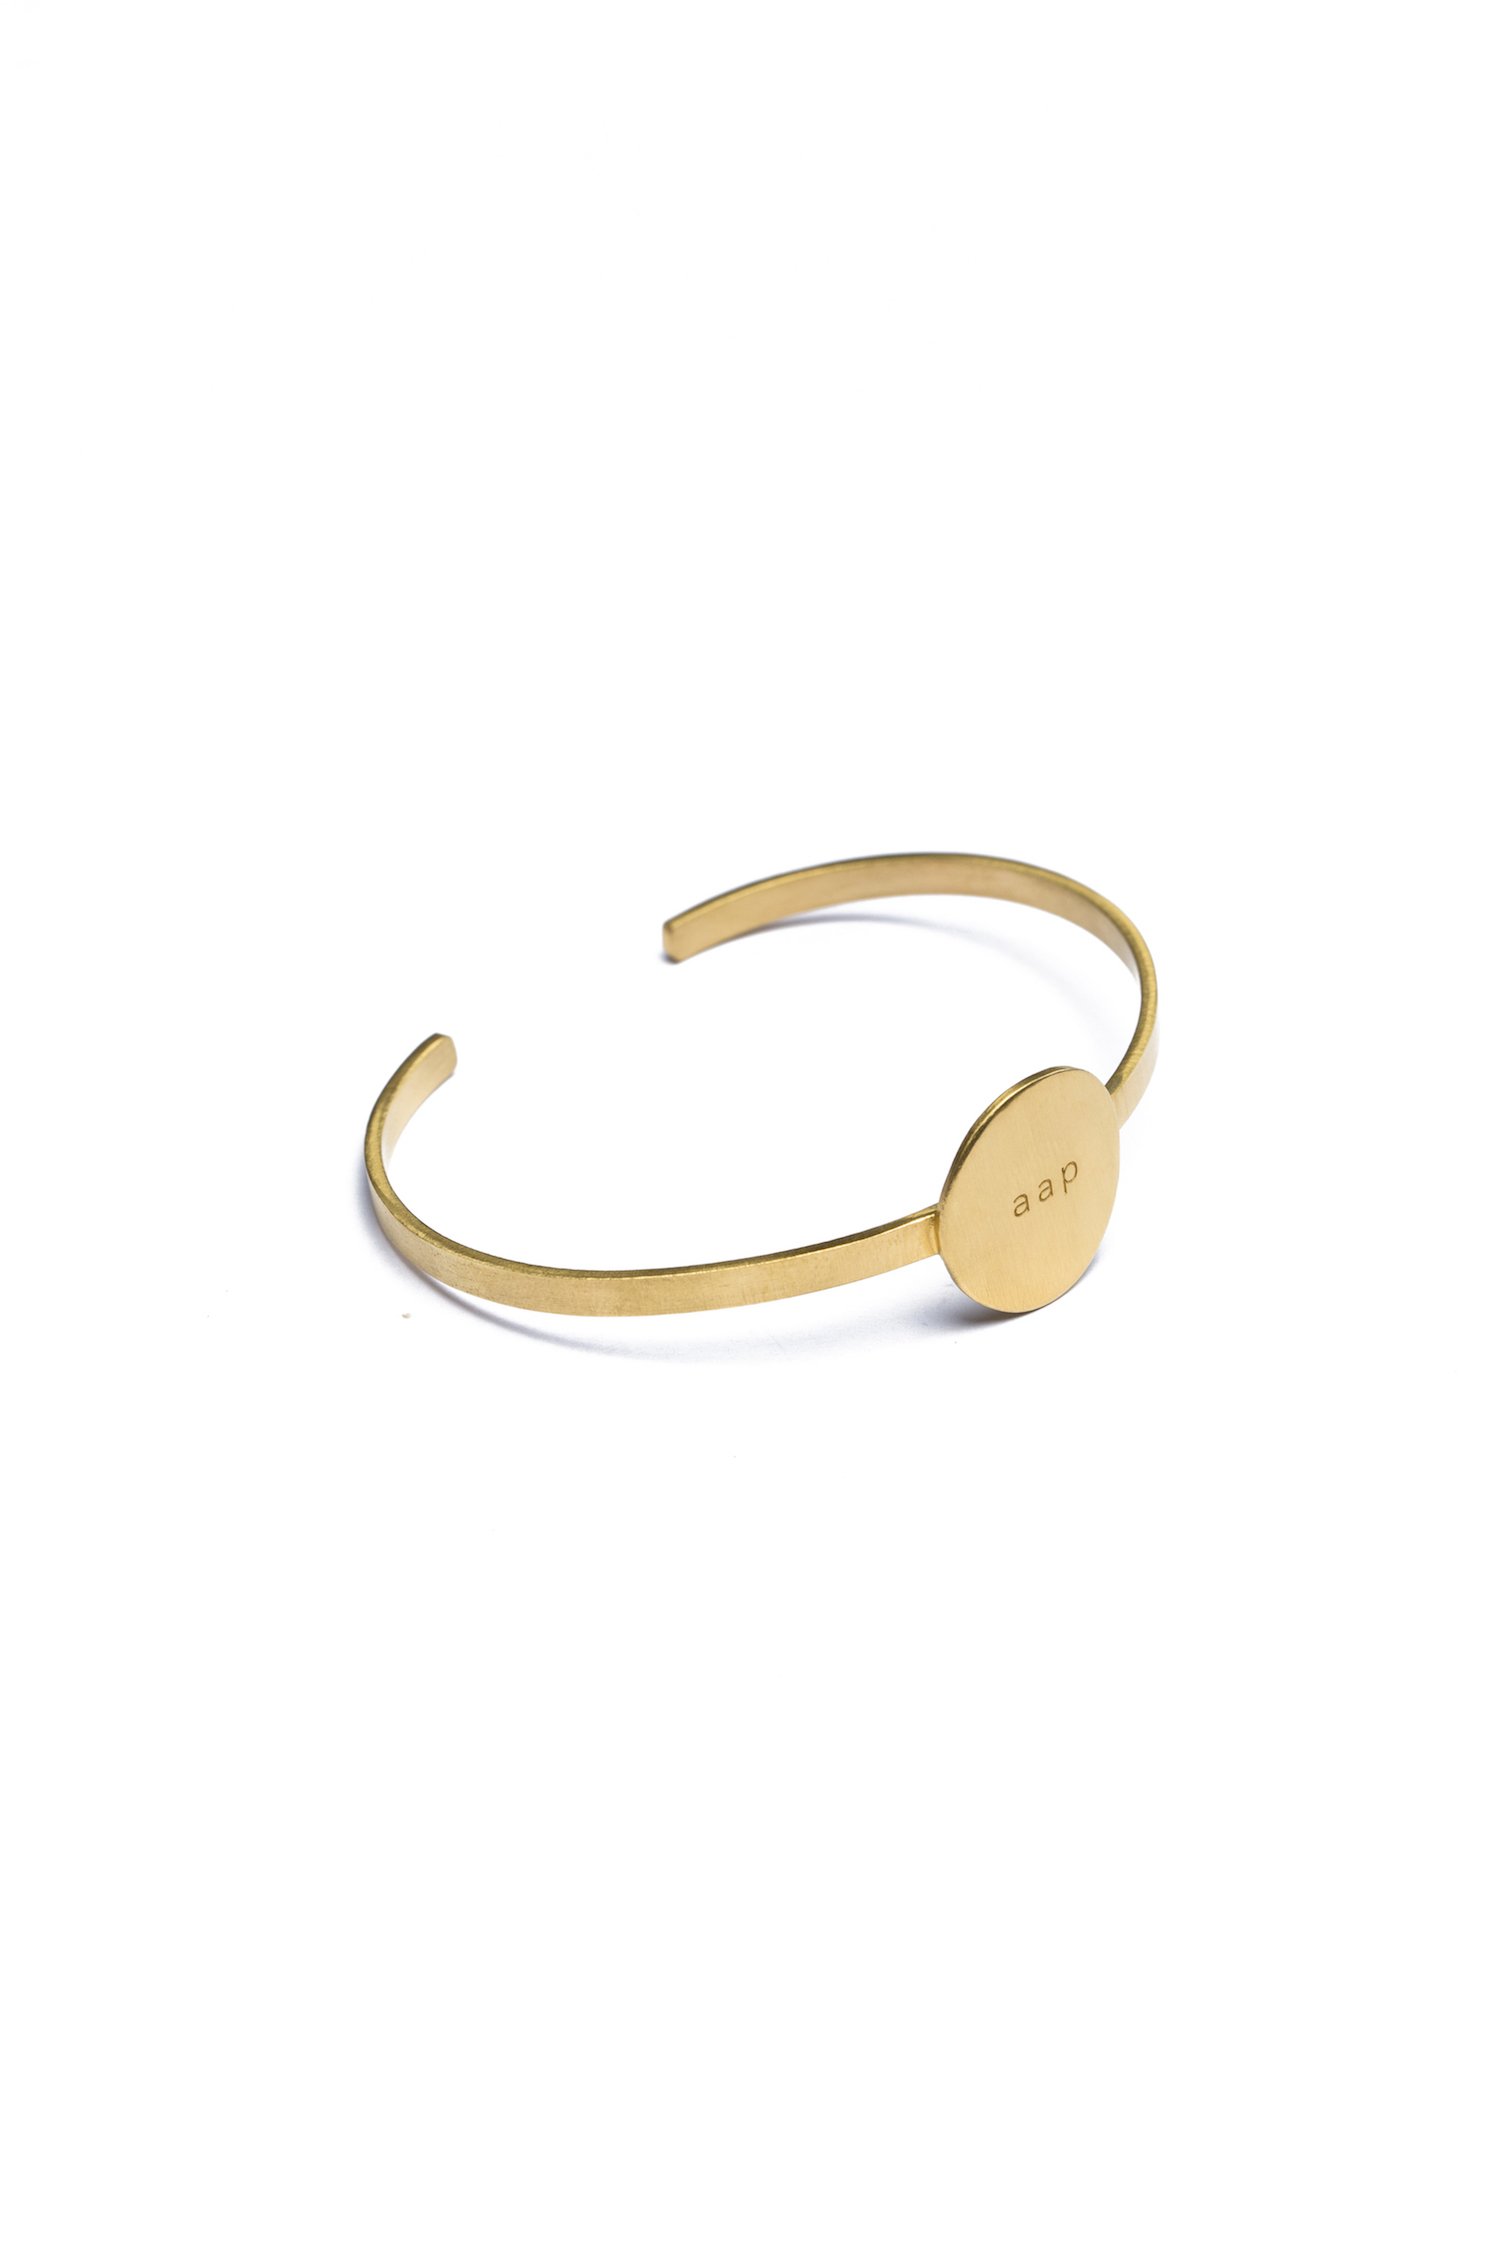 Aap - Prabhu Aap Jago Cuff Bracelet (Gold)